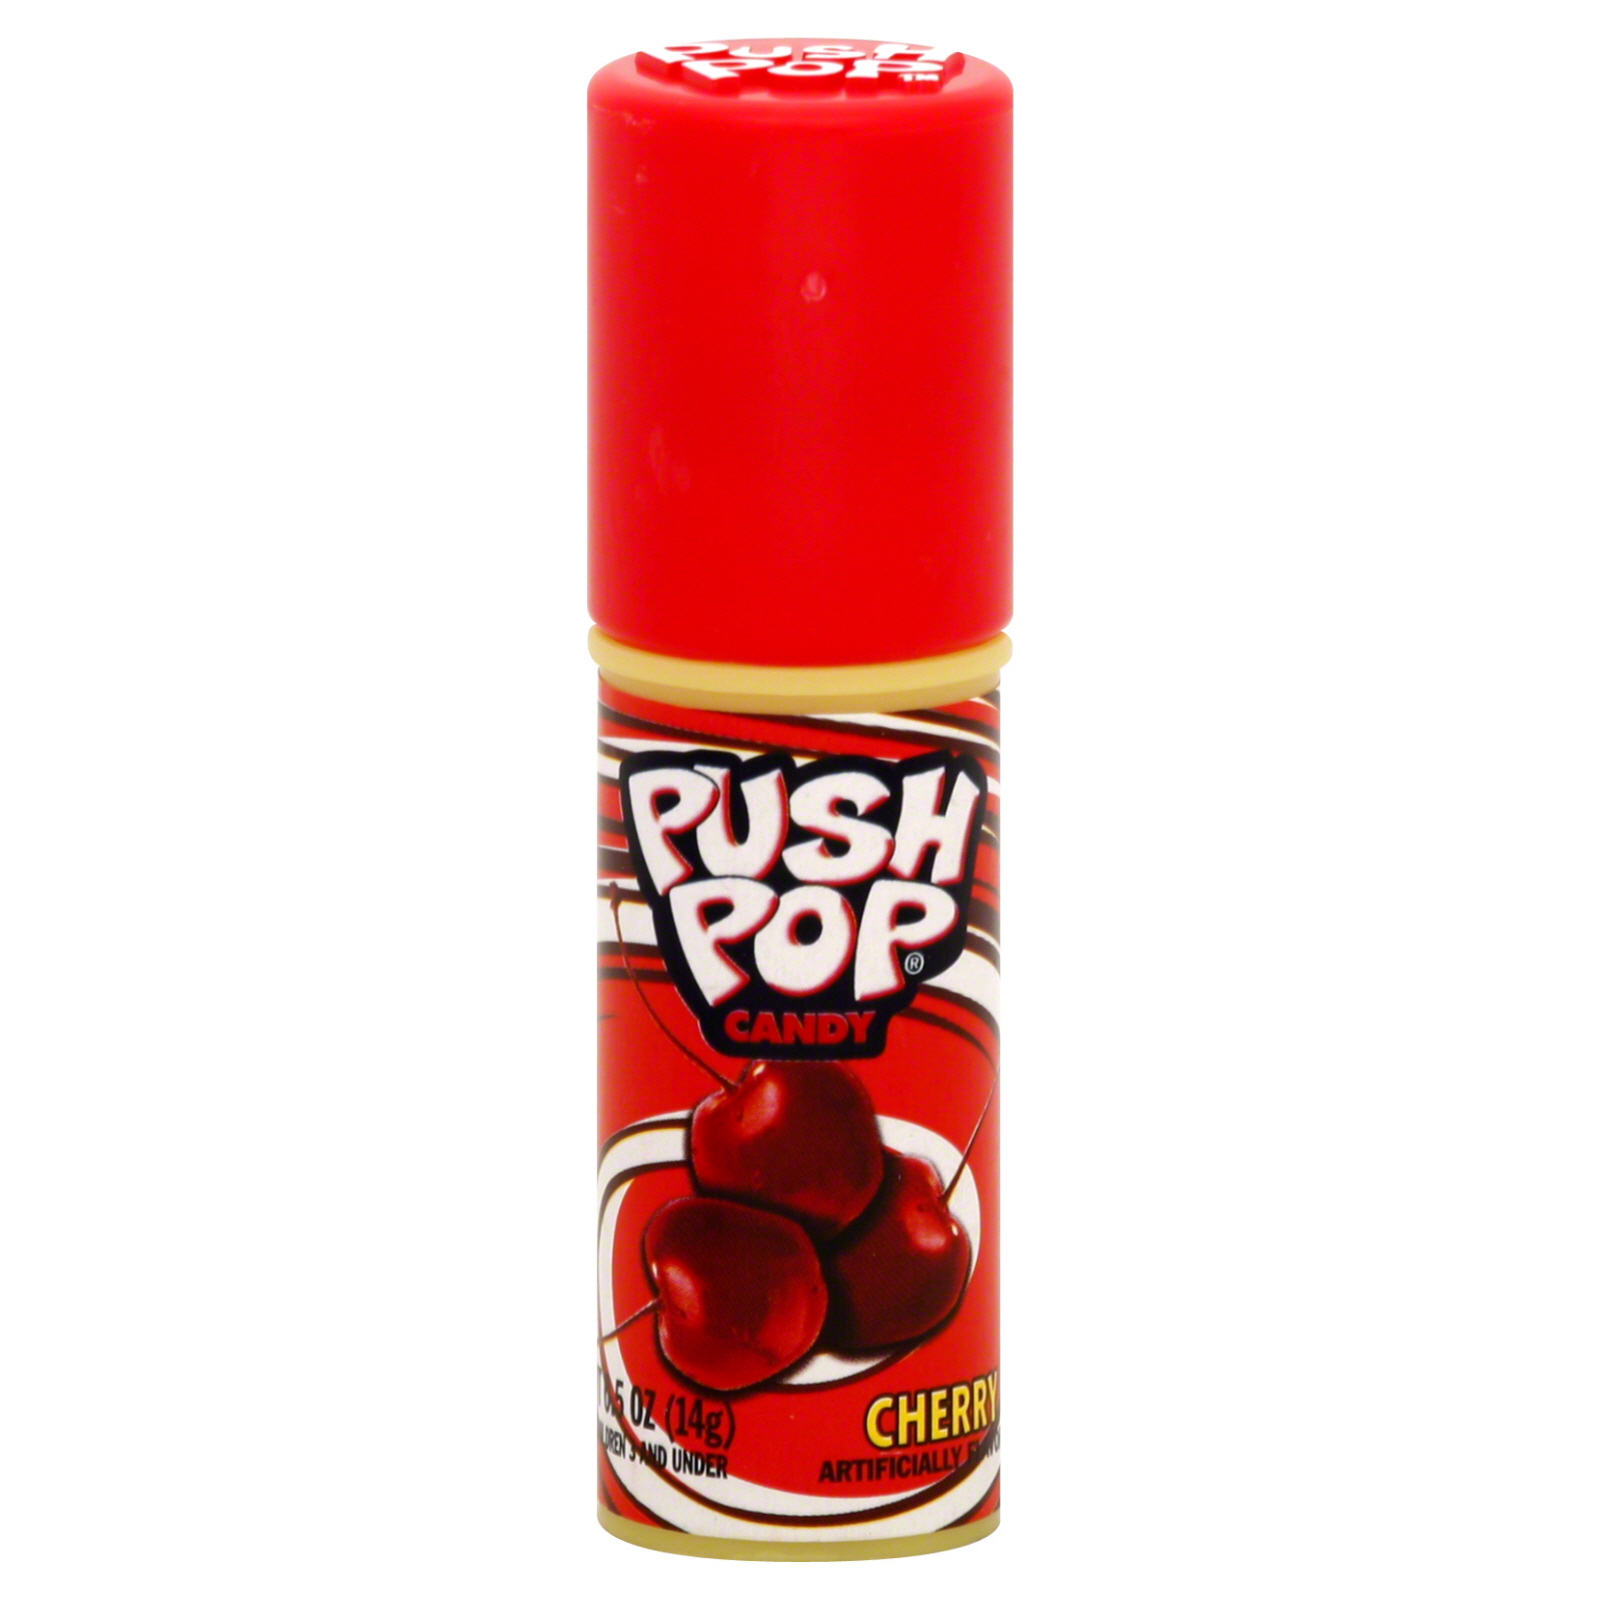 Push Pop Candy, Cherry, 0.5 oz (14 g)